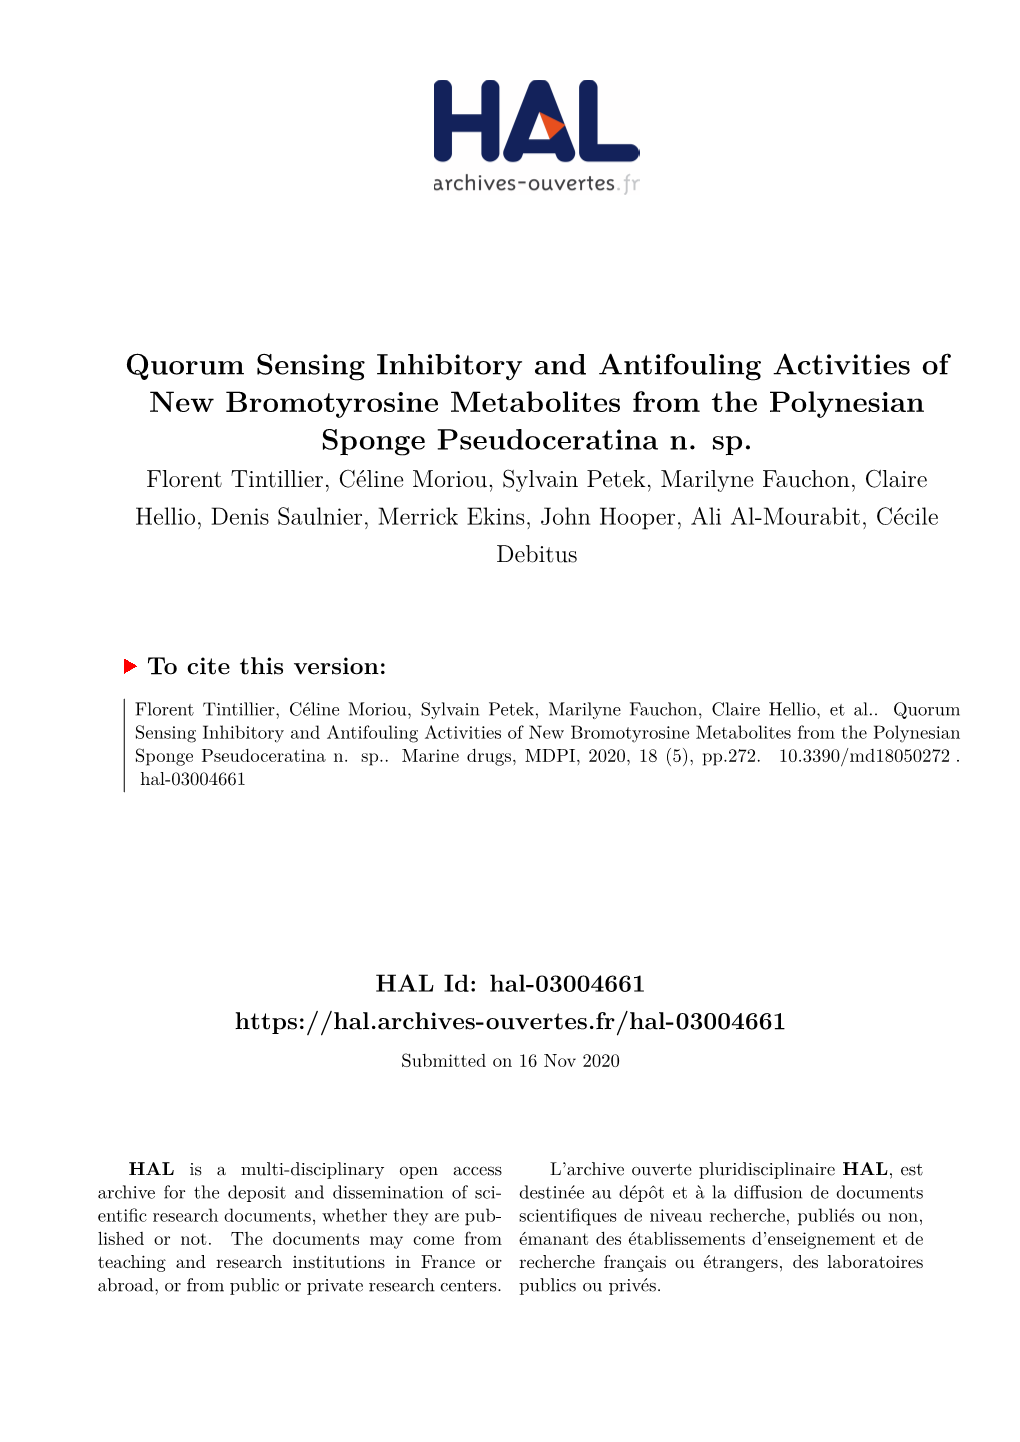 Quorum Sensing Inhibitory and Antifouling Activities of New Bromotyrosine Metabolites from the Polynesian Sponge Pseudoceratina N